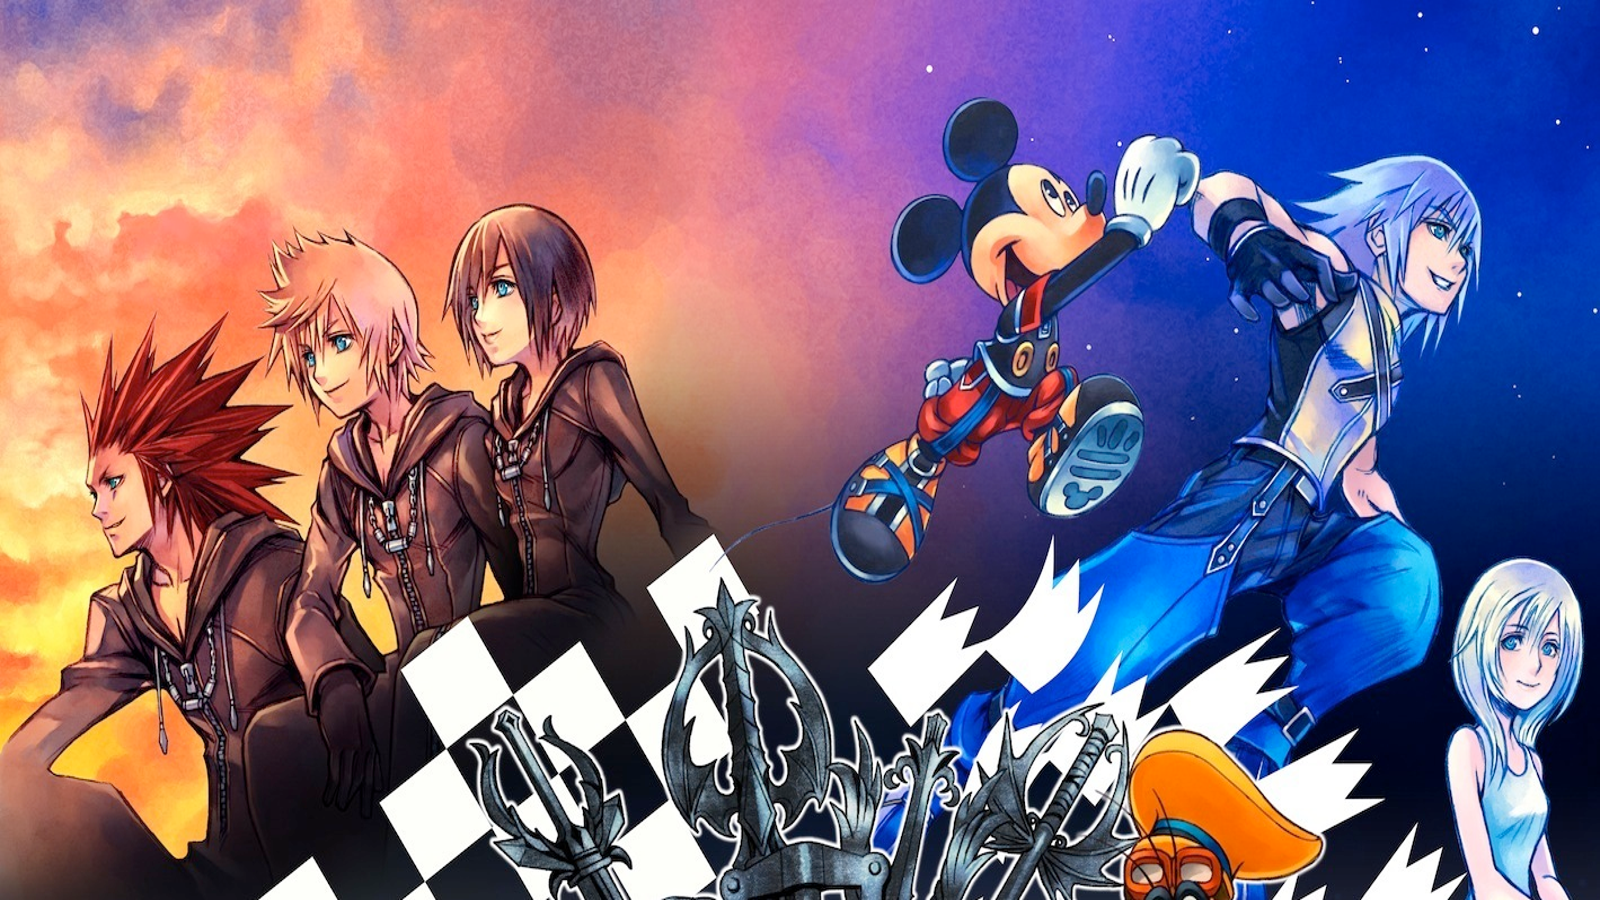 Kingdom Hearts HD 1.5 ReMIX Review - Highlander